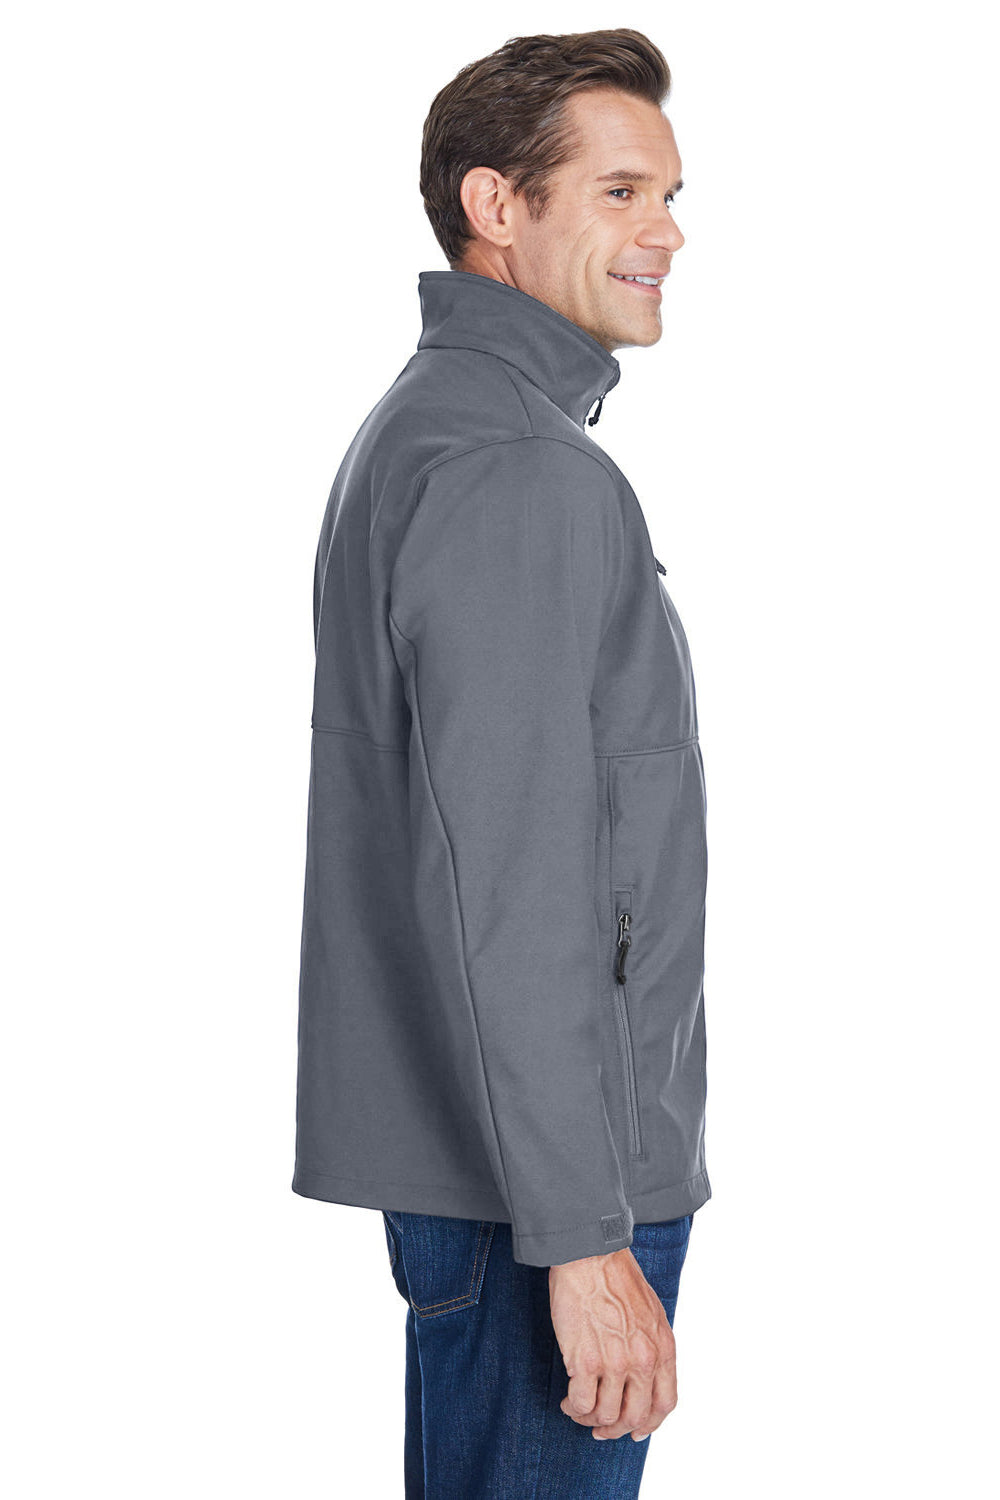 Columbia C6044/155653 Mens Ascender Wind & Water Resistant Full Zip Jacket Graphite Grey SIde